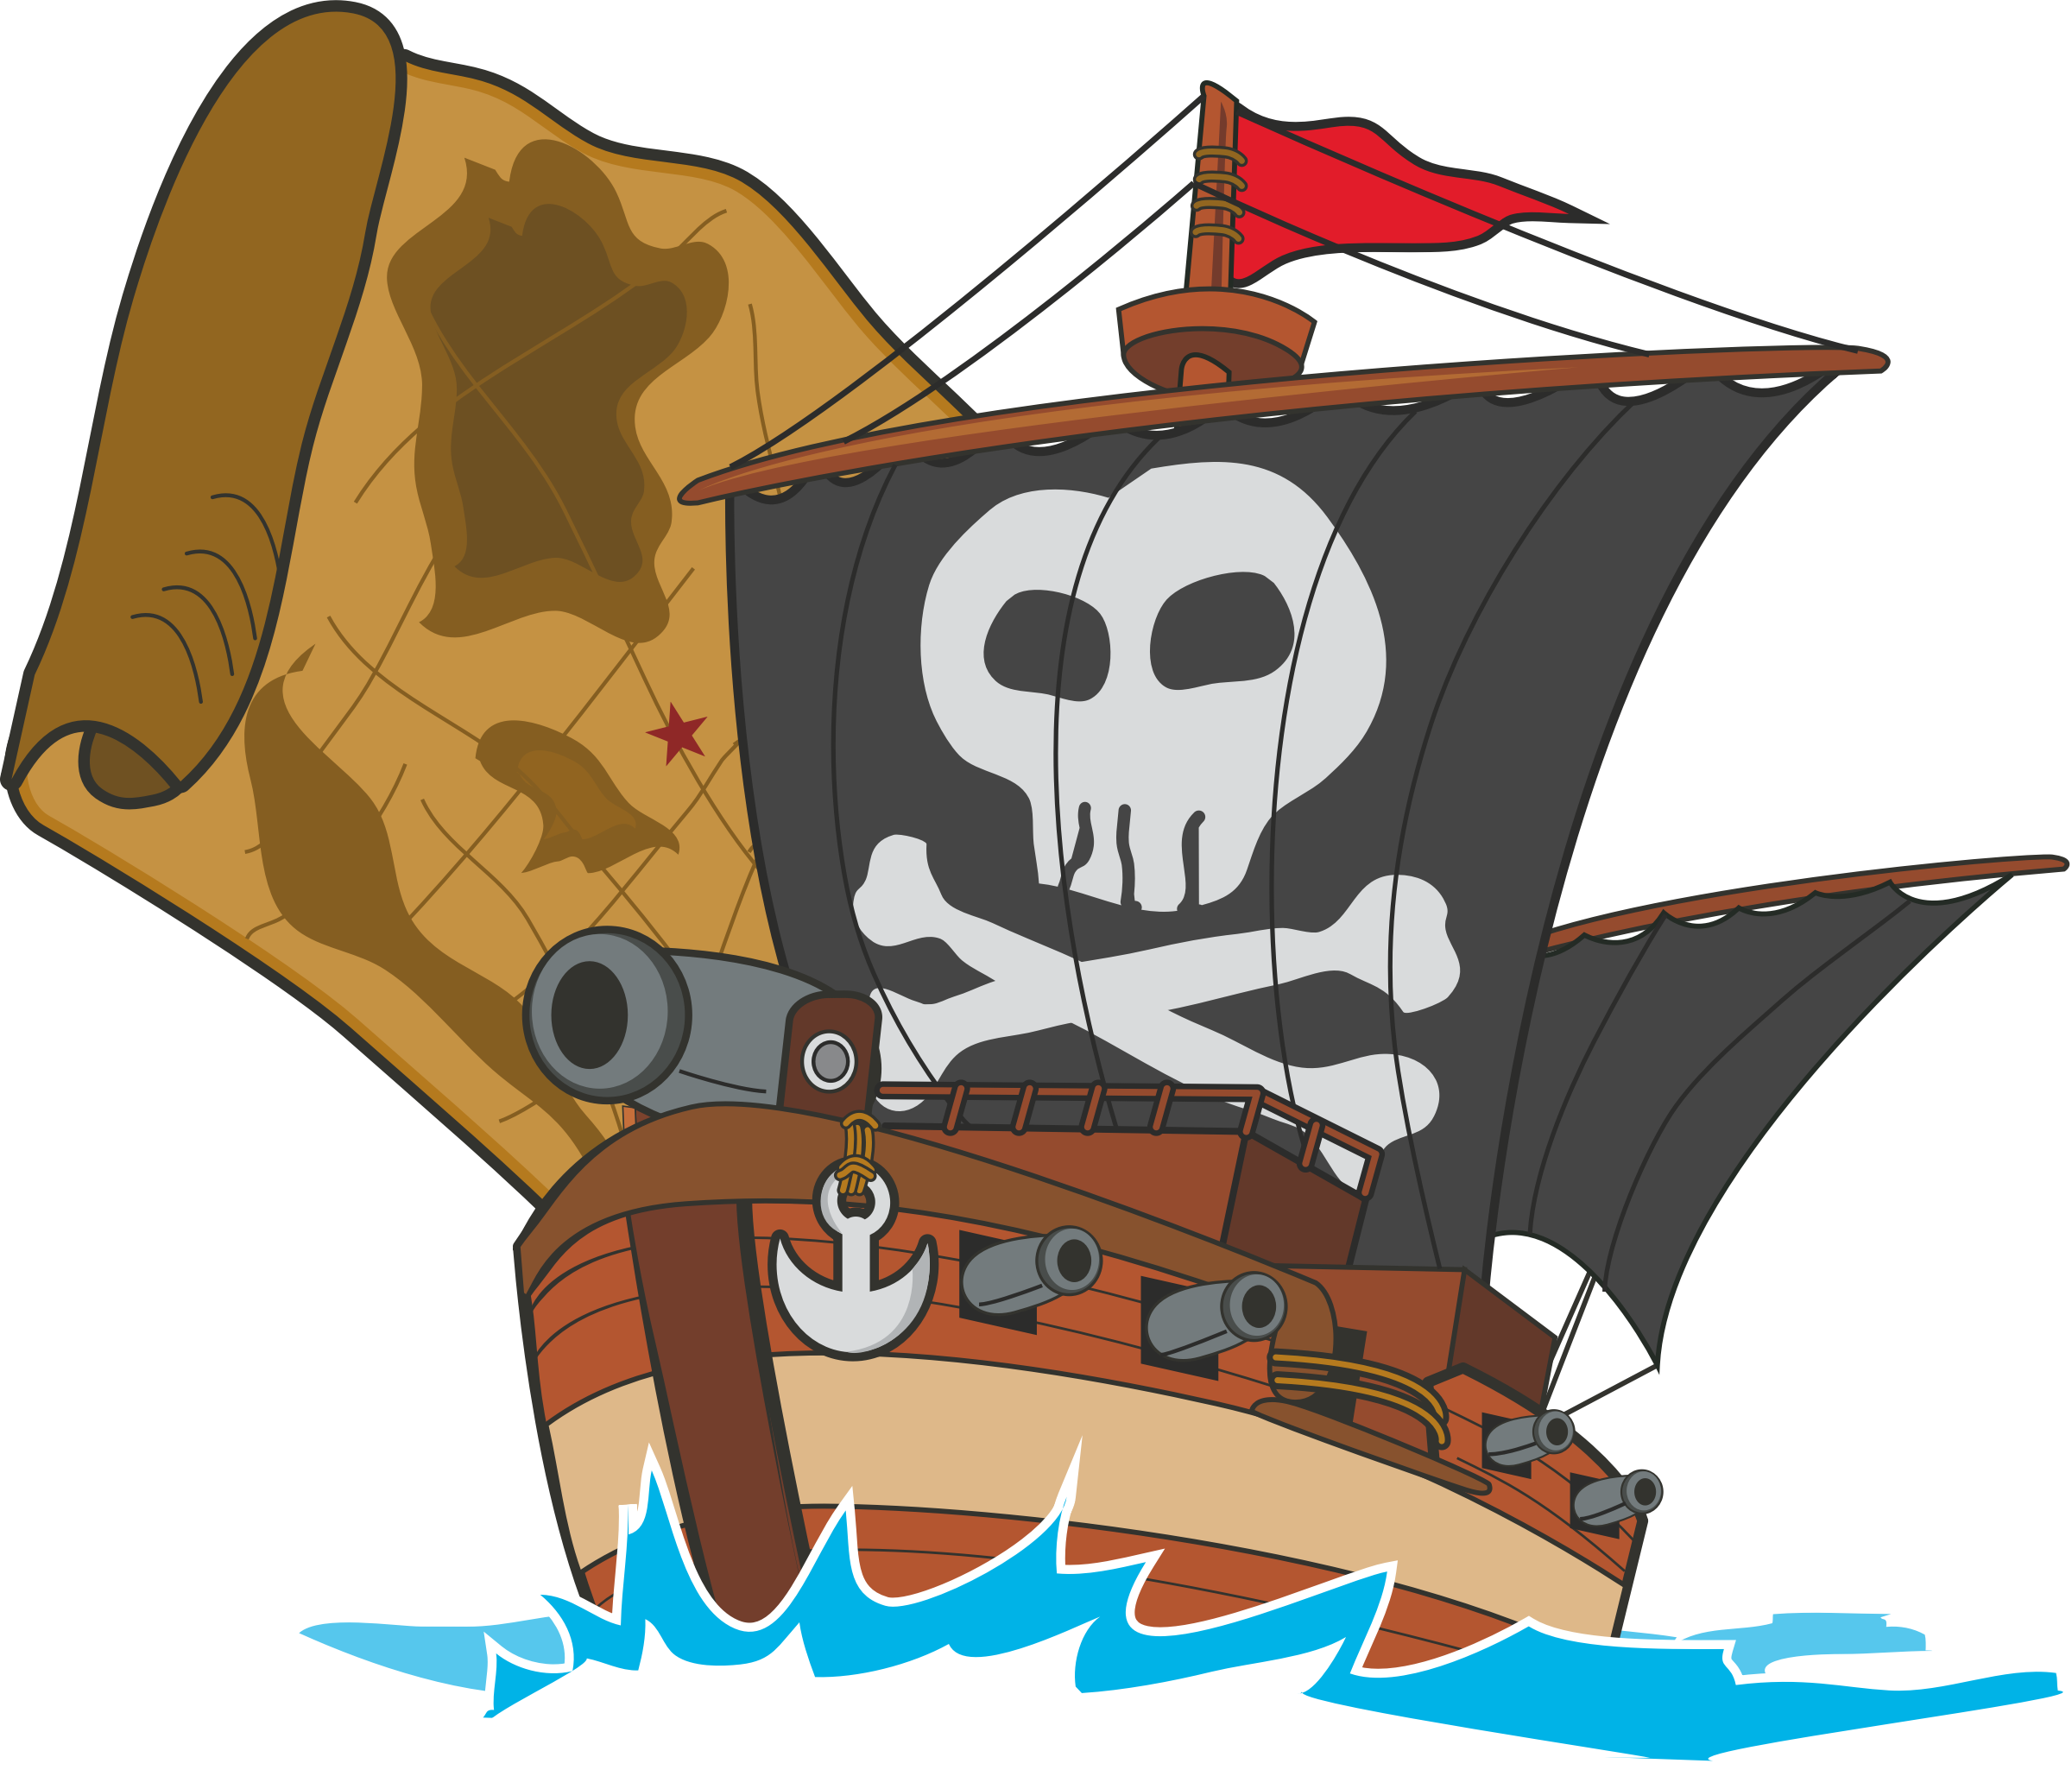 A Cartoon Of A Pirate Ship